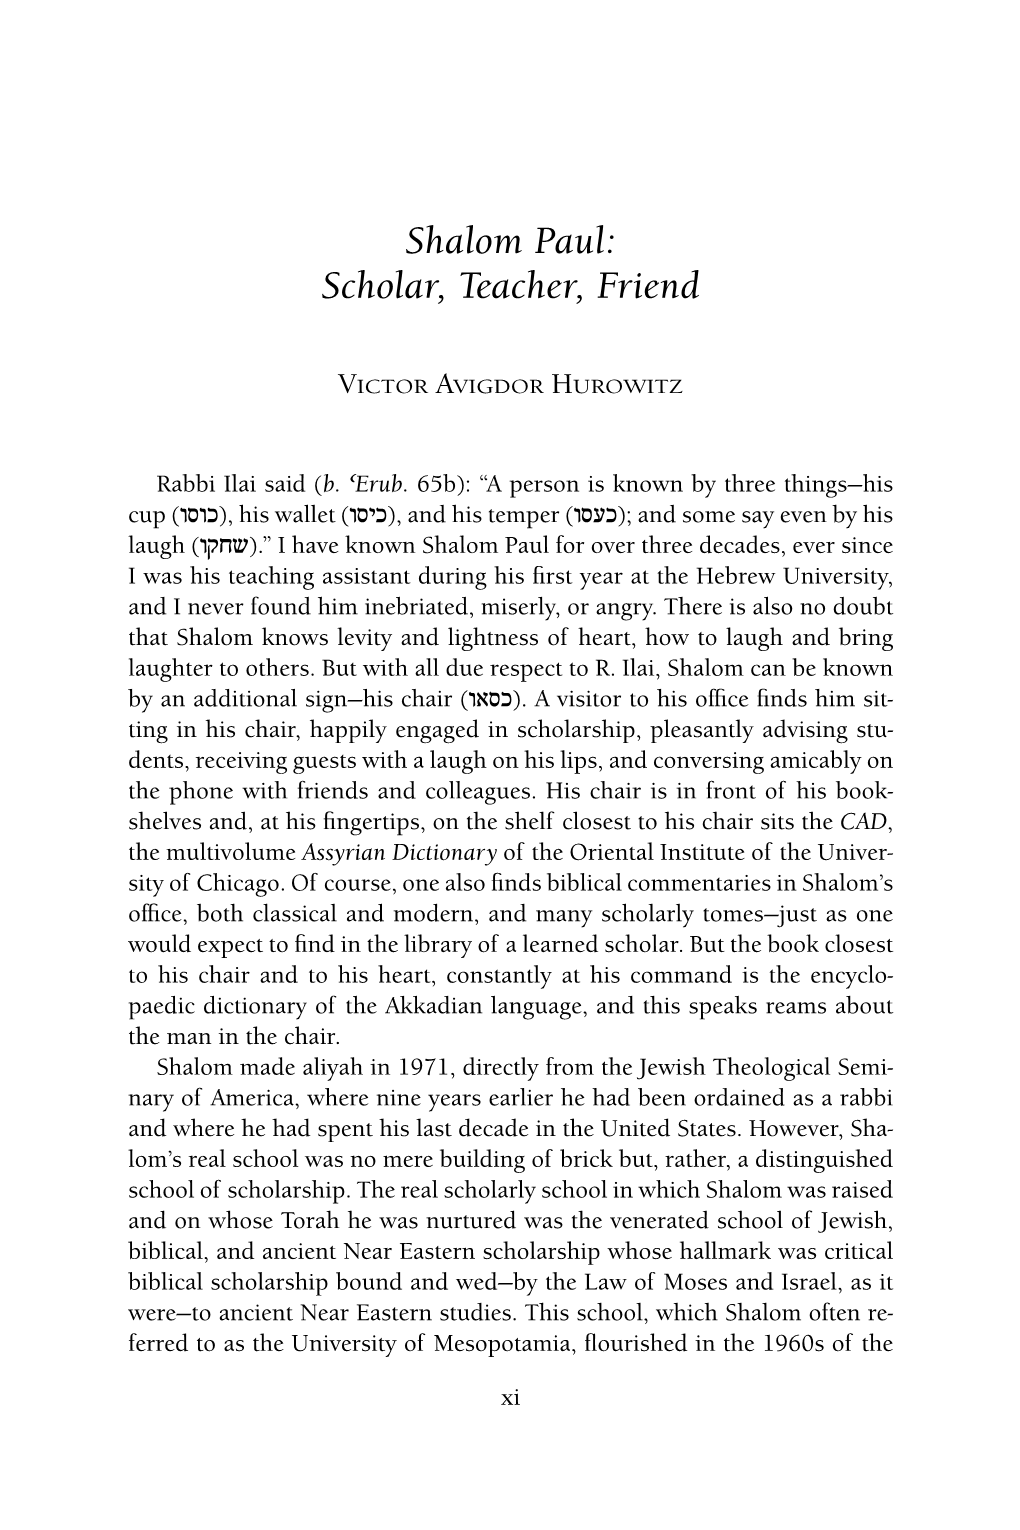 Shalom Paul: Scholar, Teacher, Friend